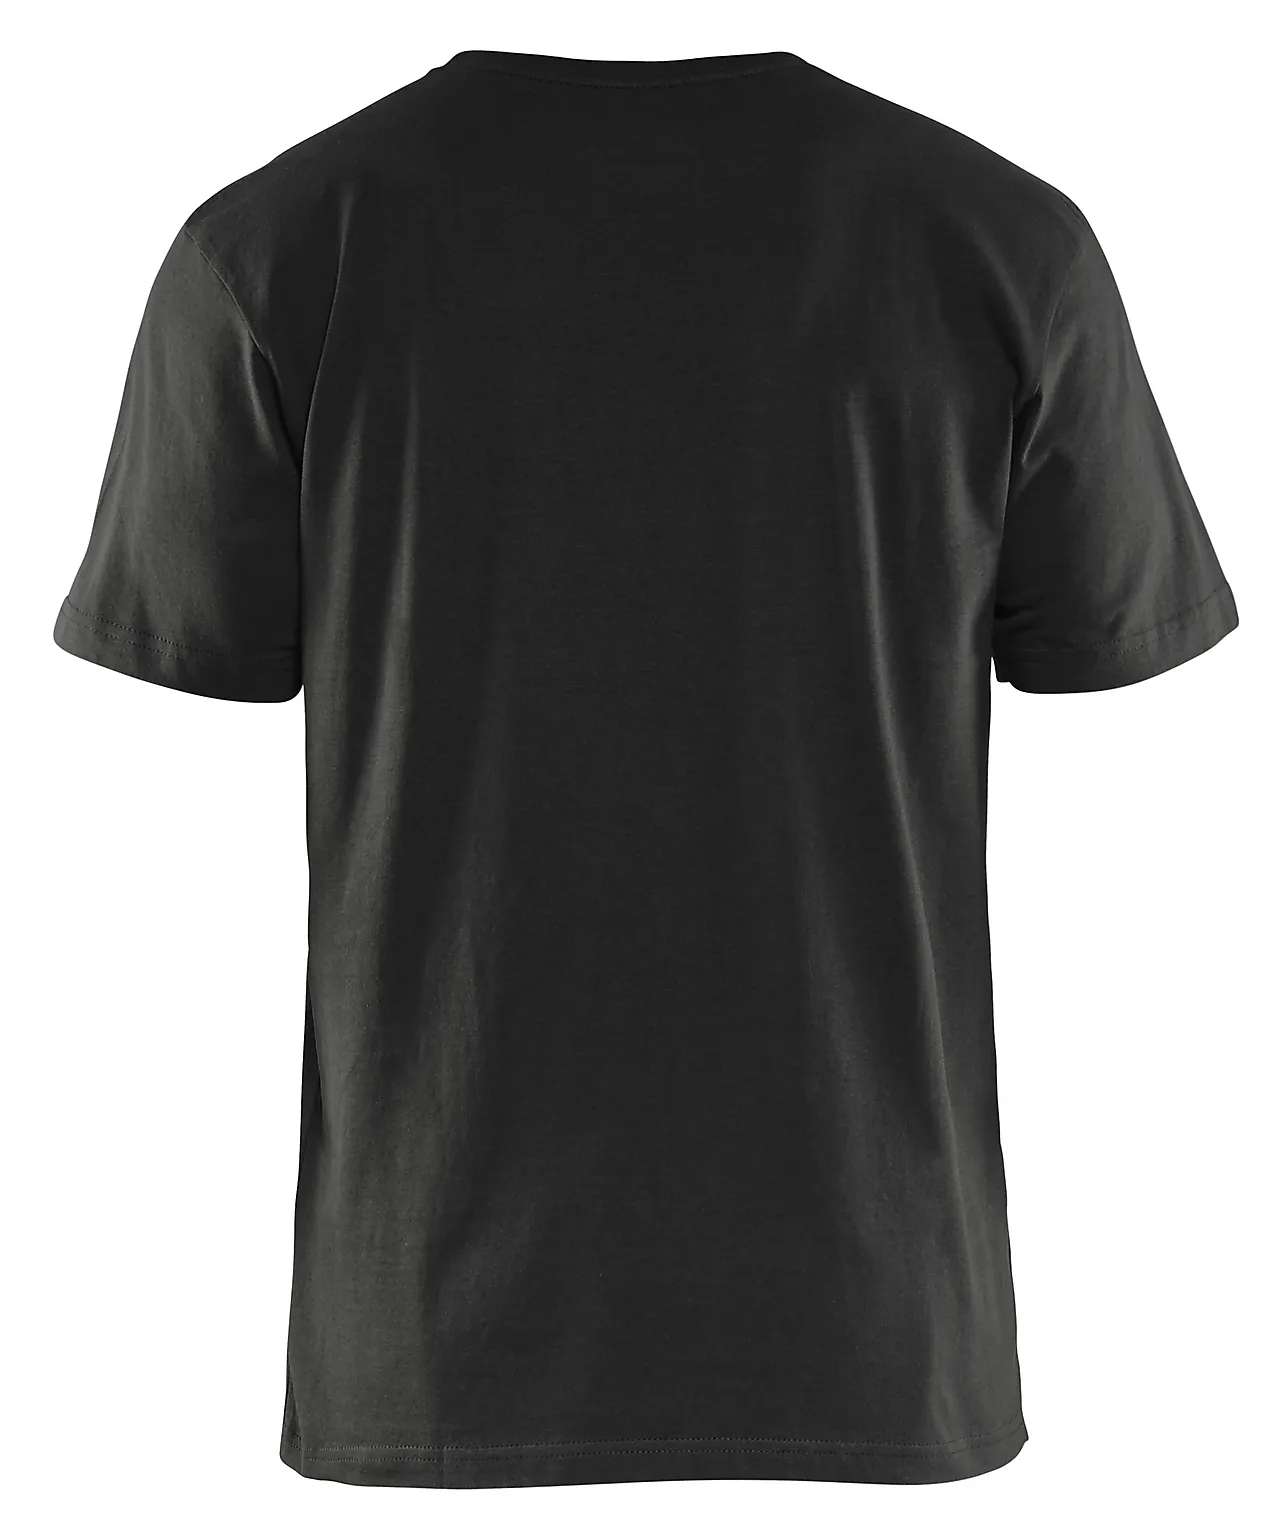 T-skjorte 5 pakk 3325104299004xl 5 pakk svart null - null - 3 - Miniatyr